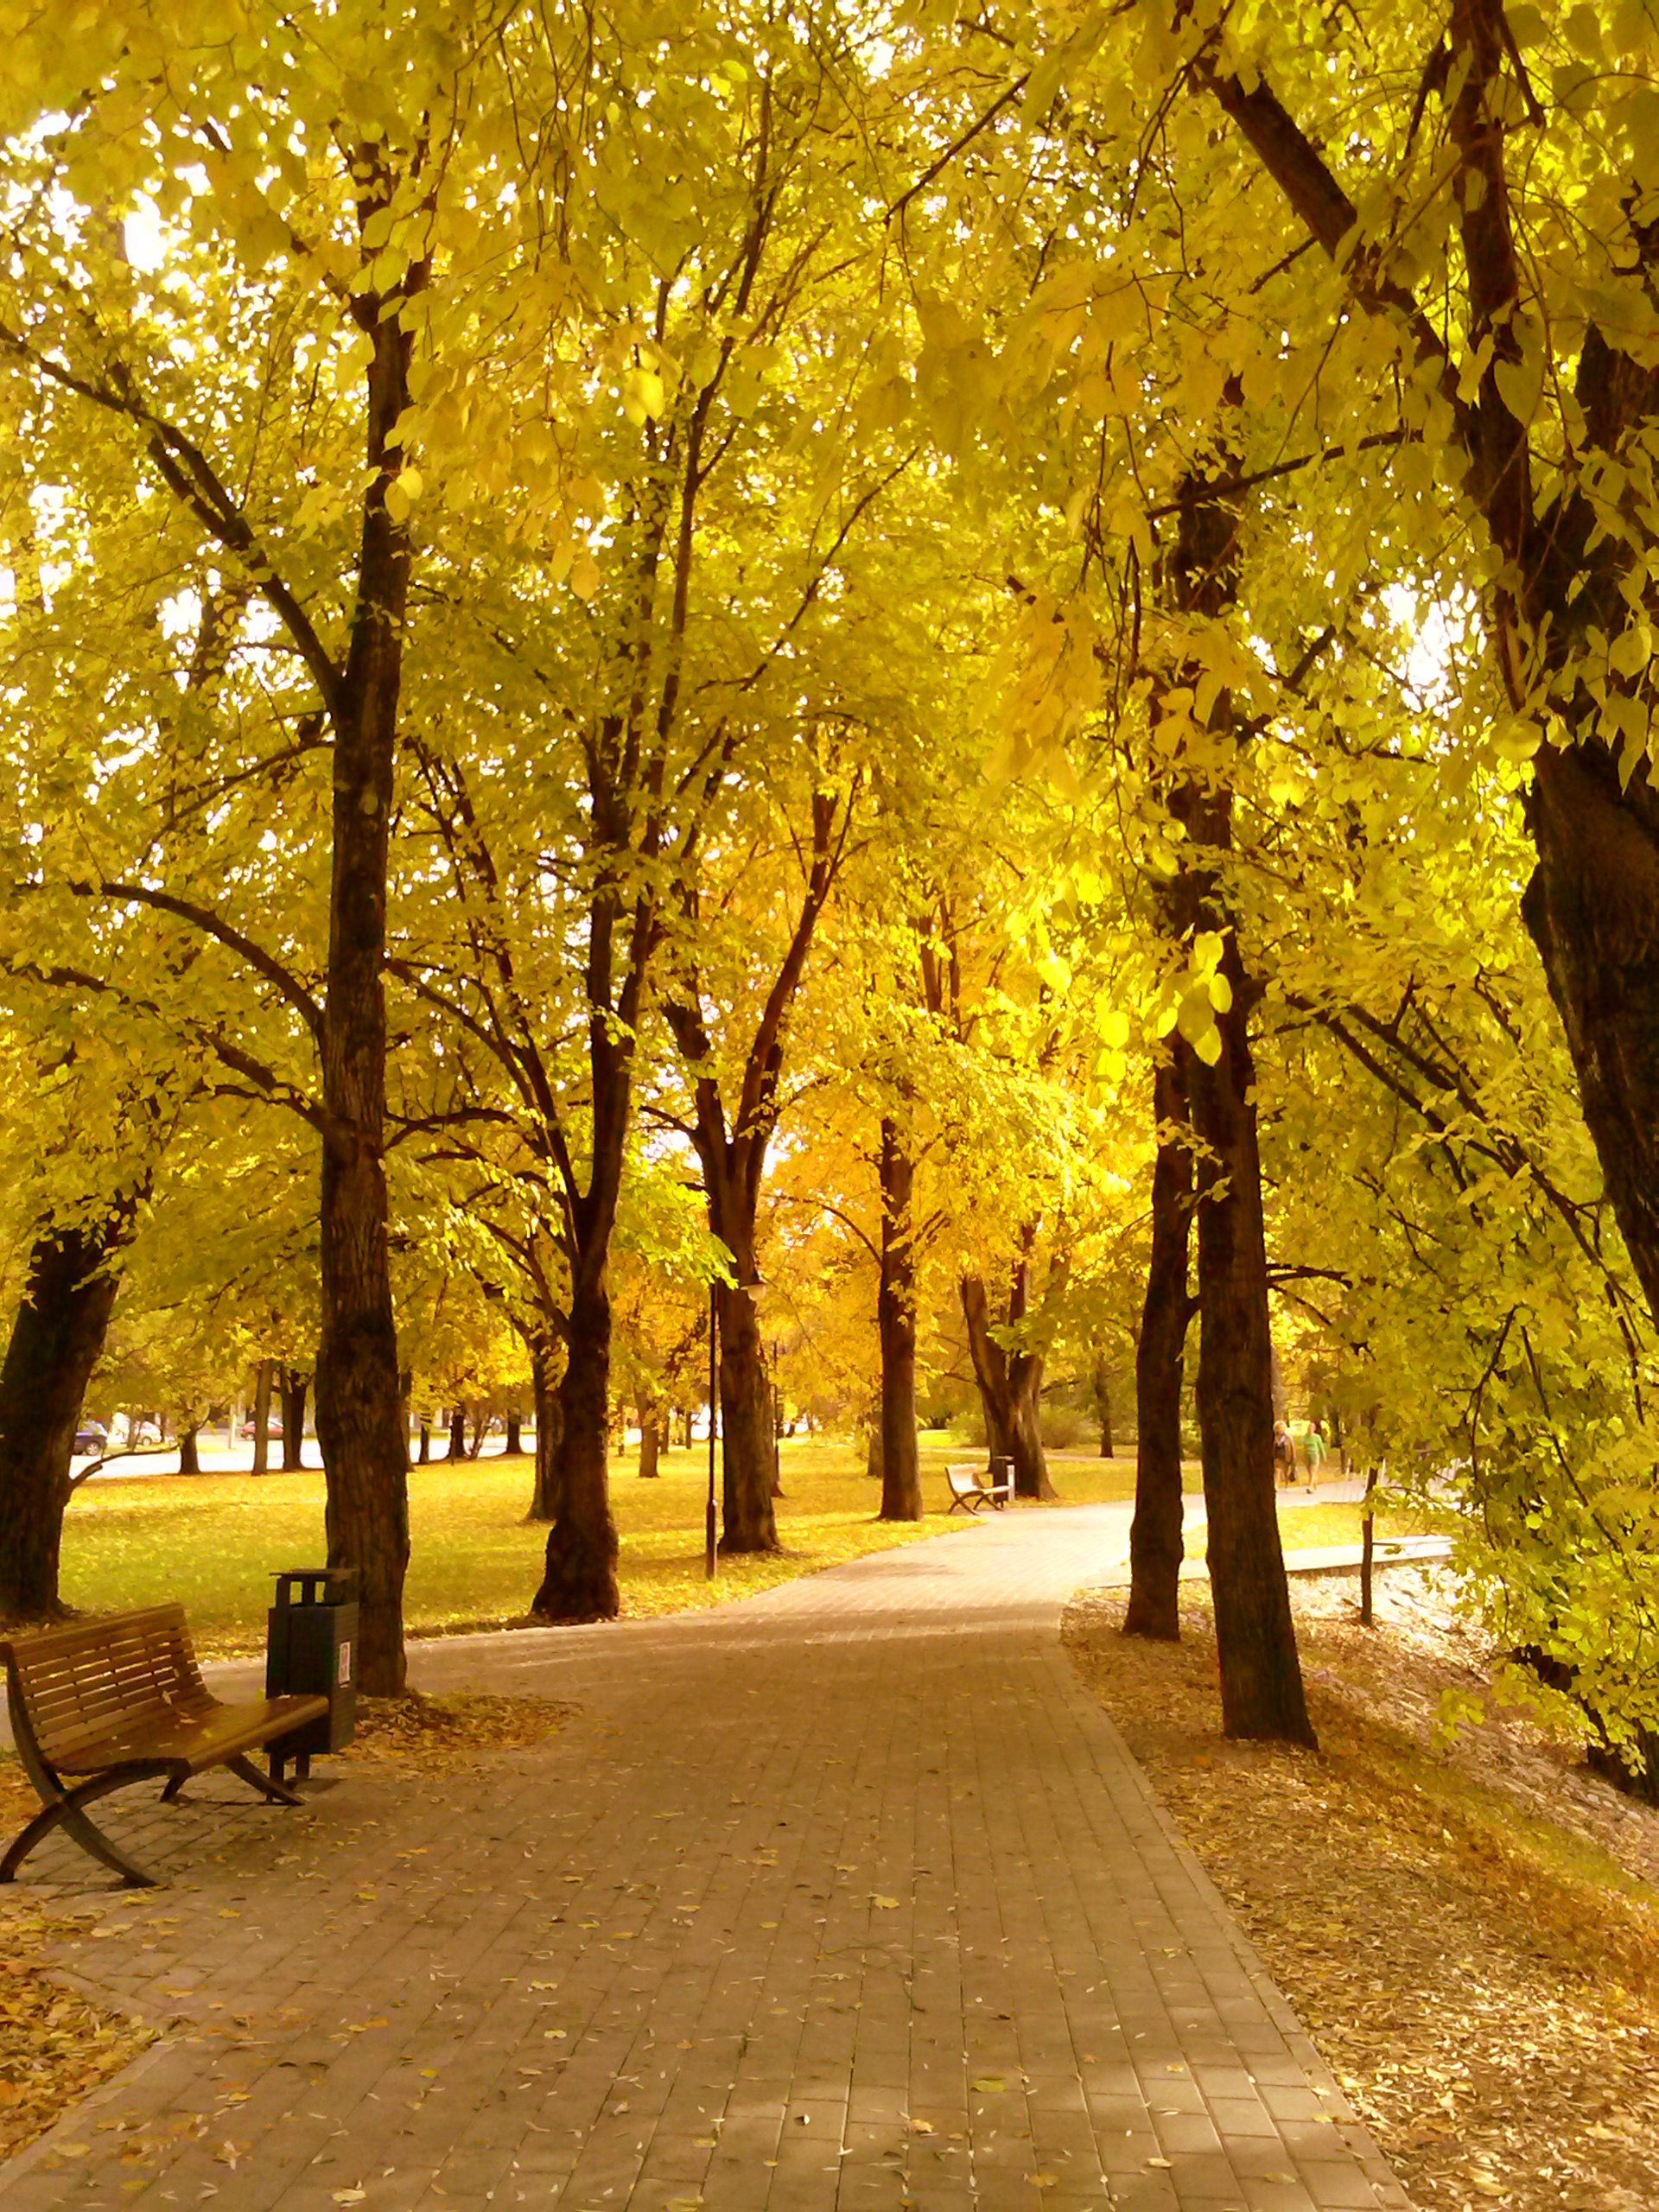 Tartu / Estonia / Autumn / Yellow | Just that | Pinterest ...